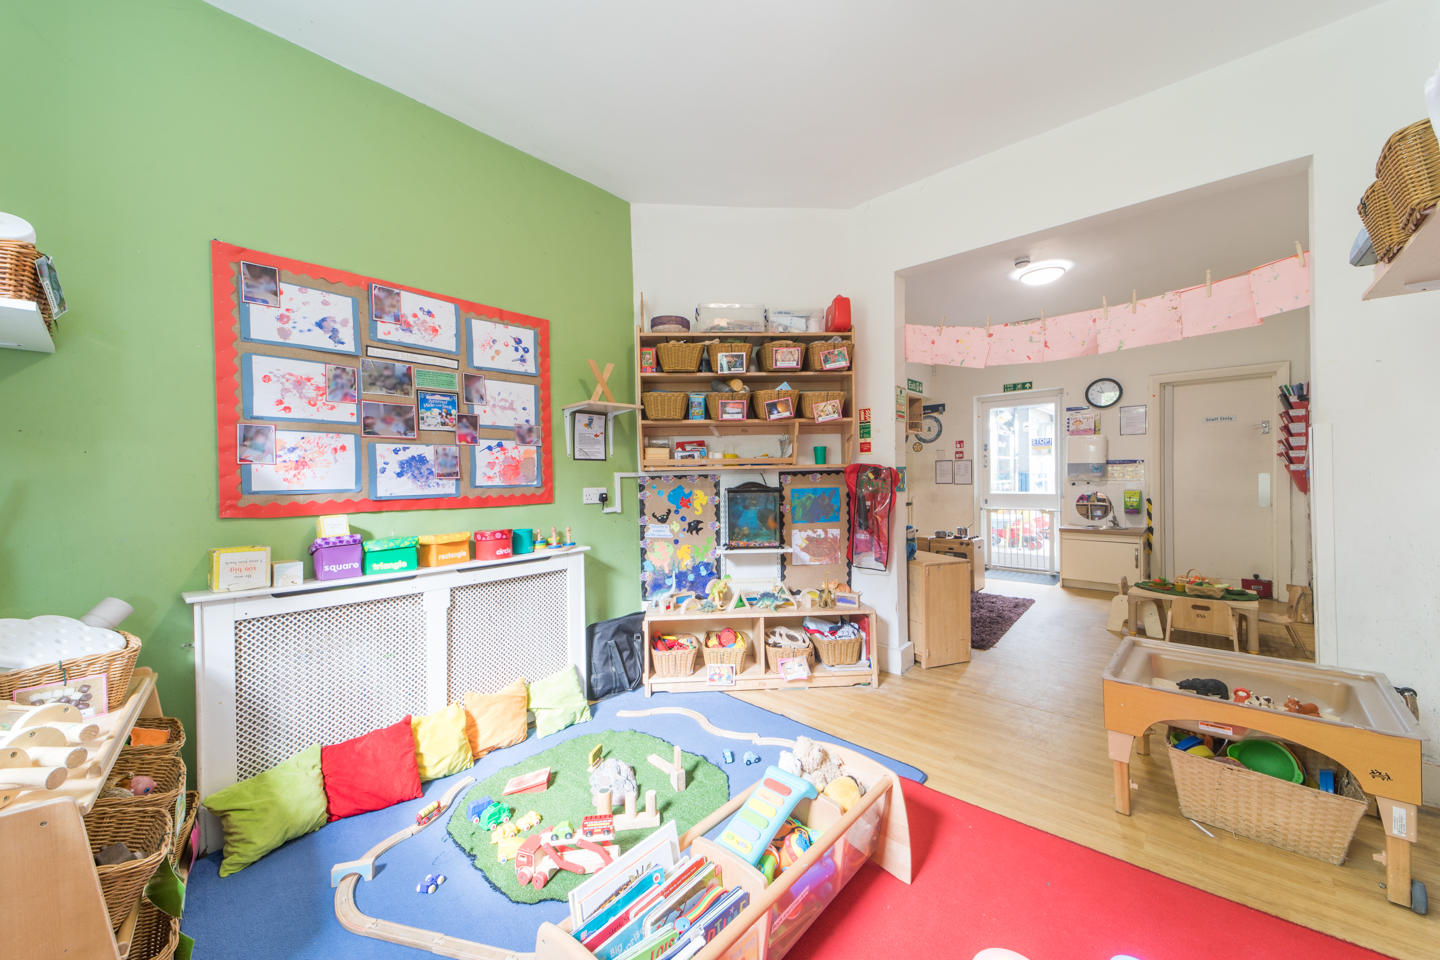 Bright Horizons Pentland Day Nursery and Preschool Finchley 03339 209555